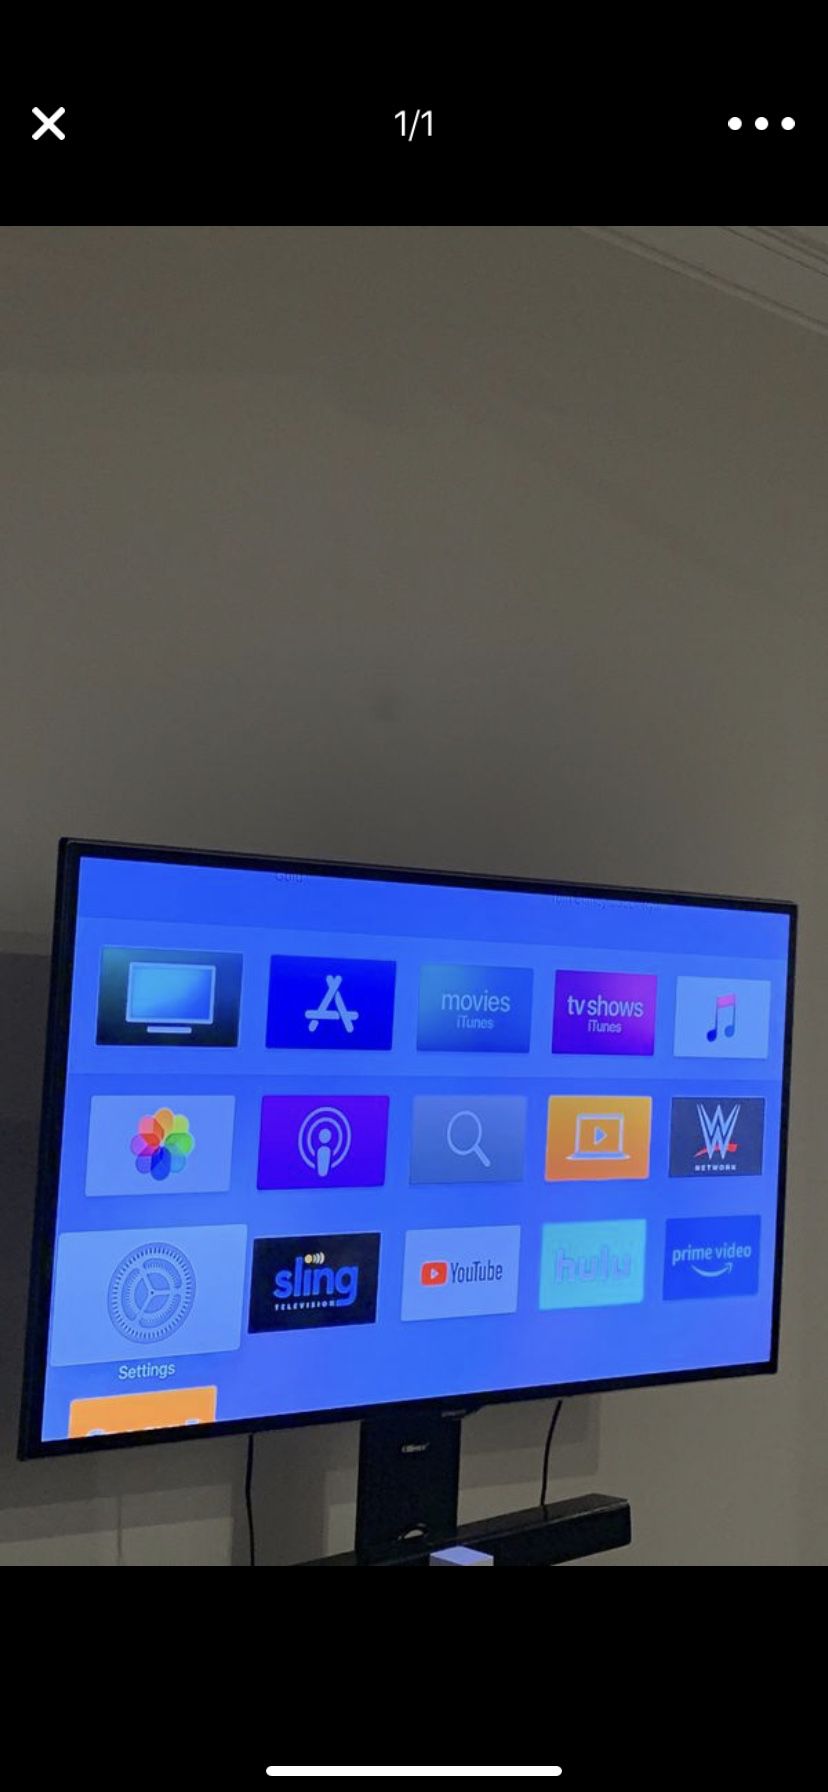 Samsung 55” LED smart TV 1080 p